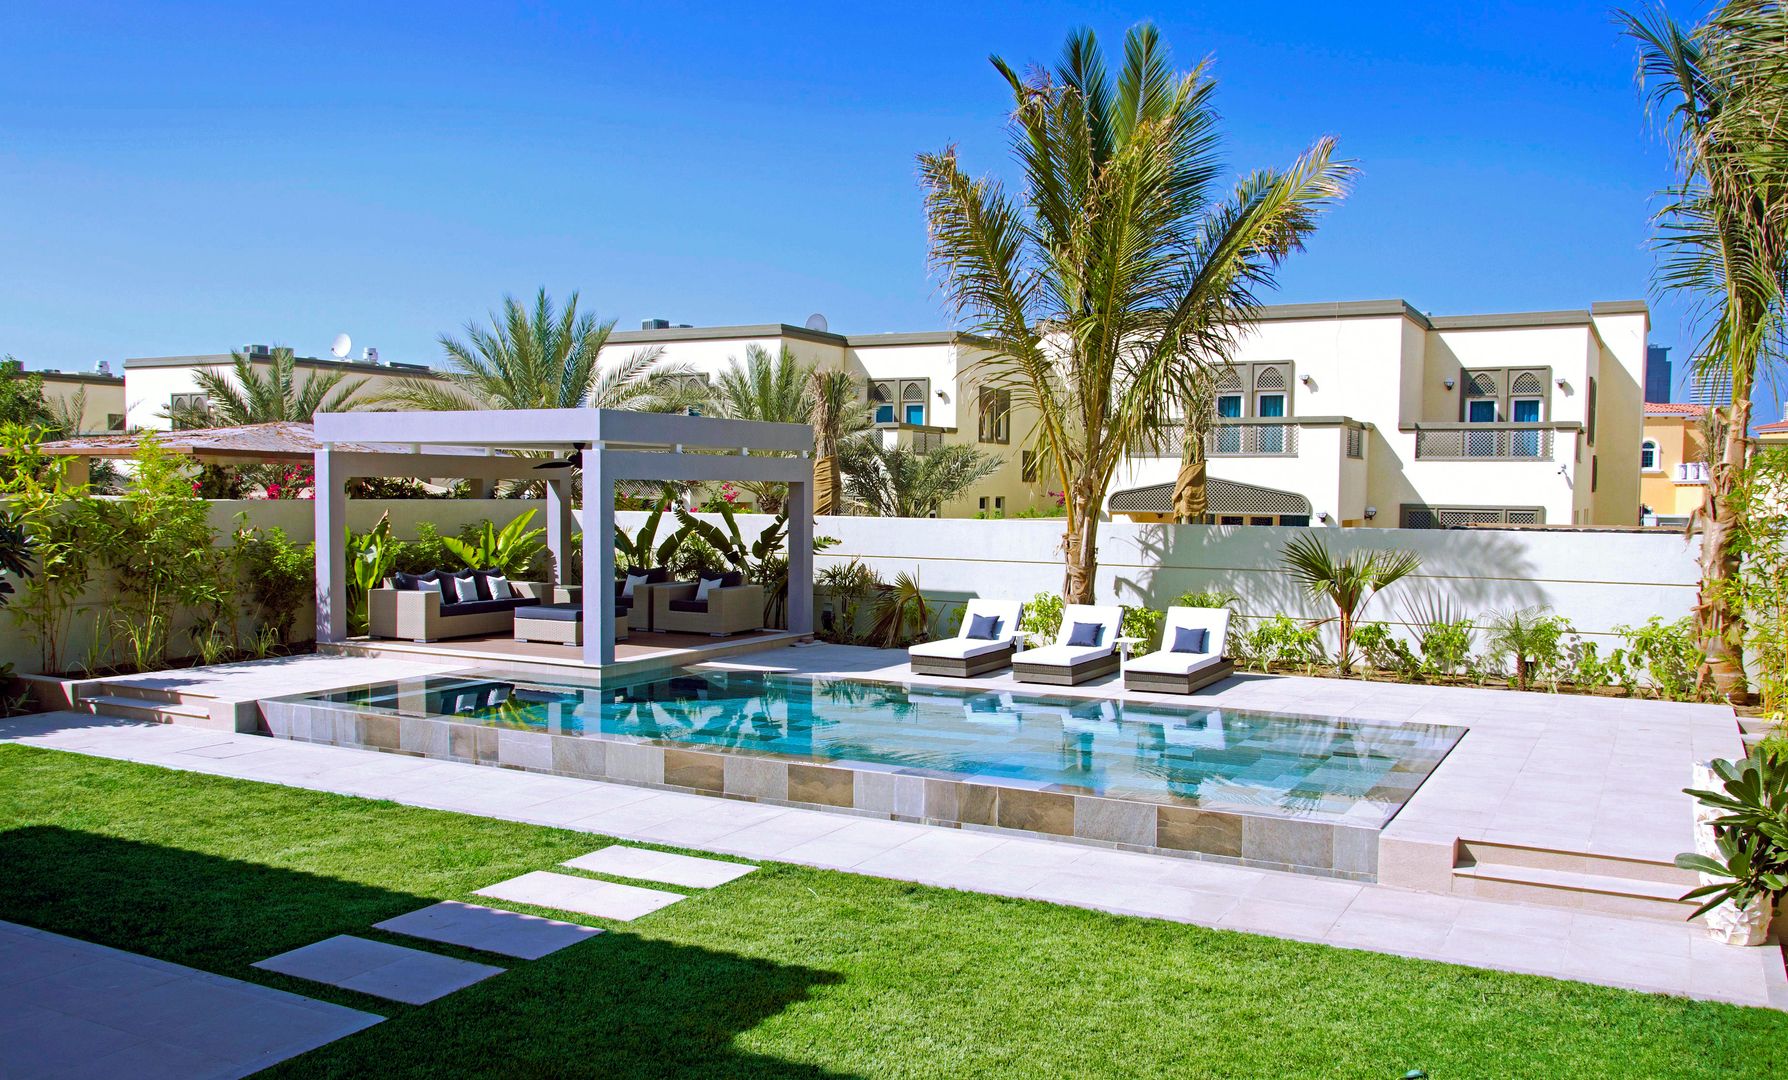 Infinity pool in Italian porcelain tiles Xterior Landscaping and Pools Pool swimming pool Dubai,landscape,design